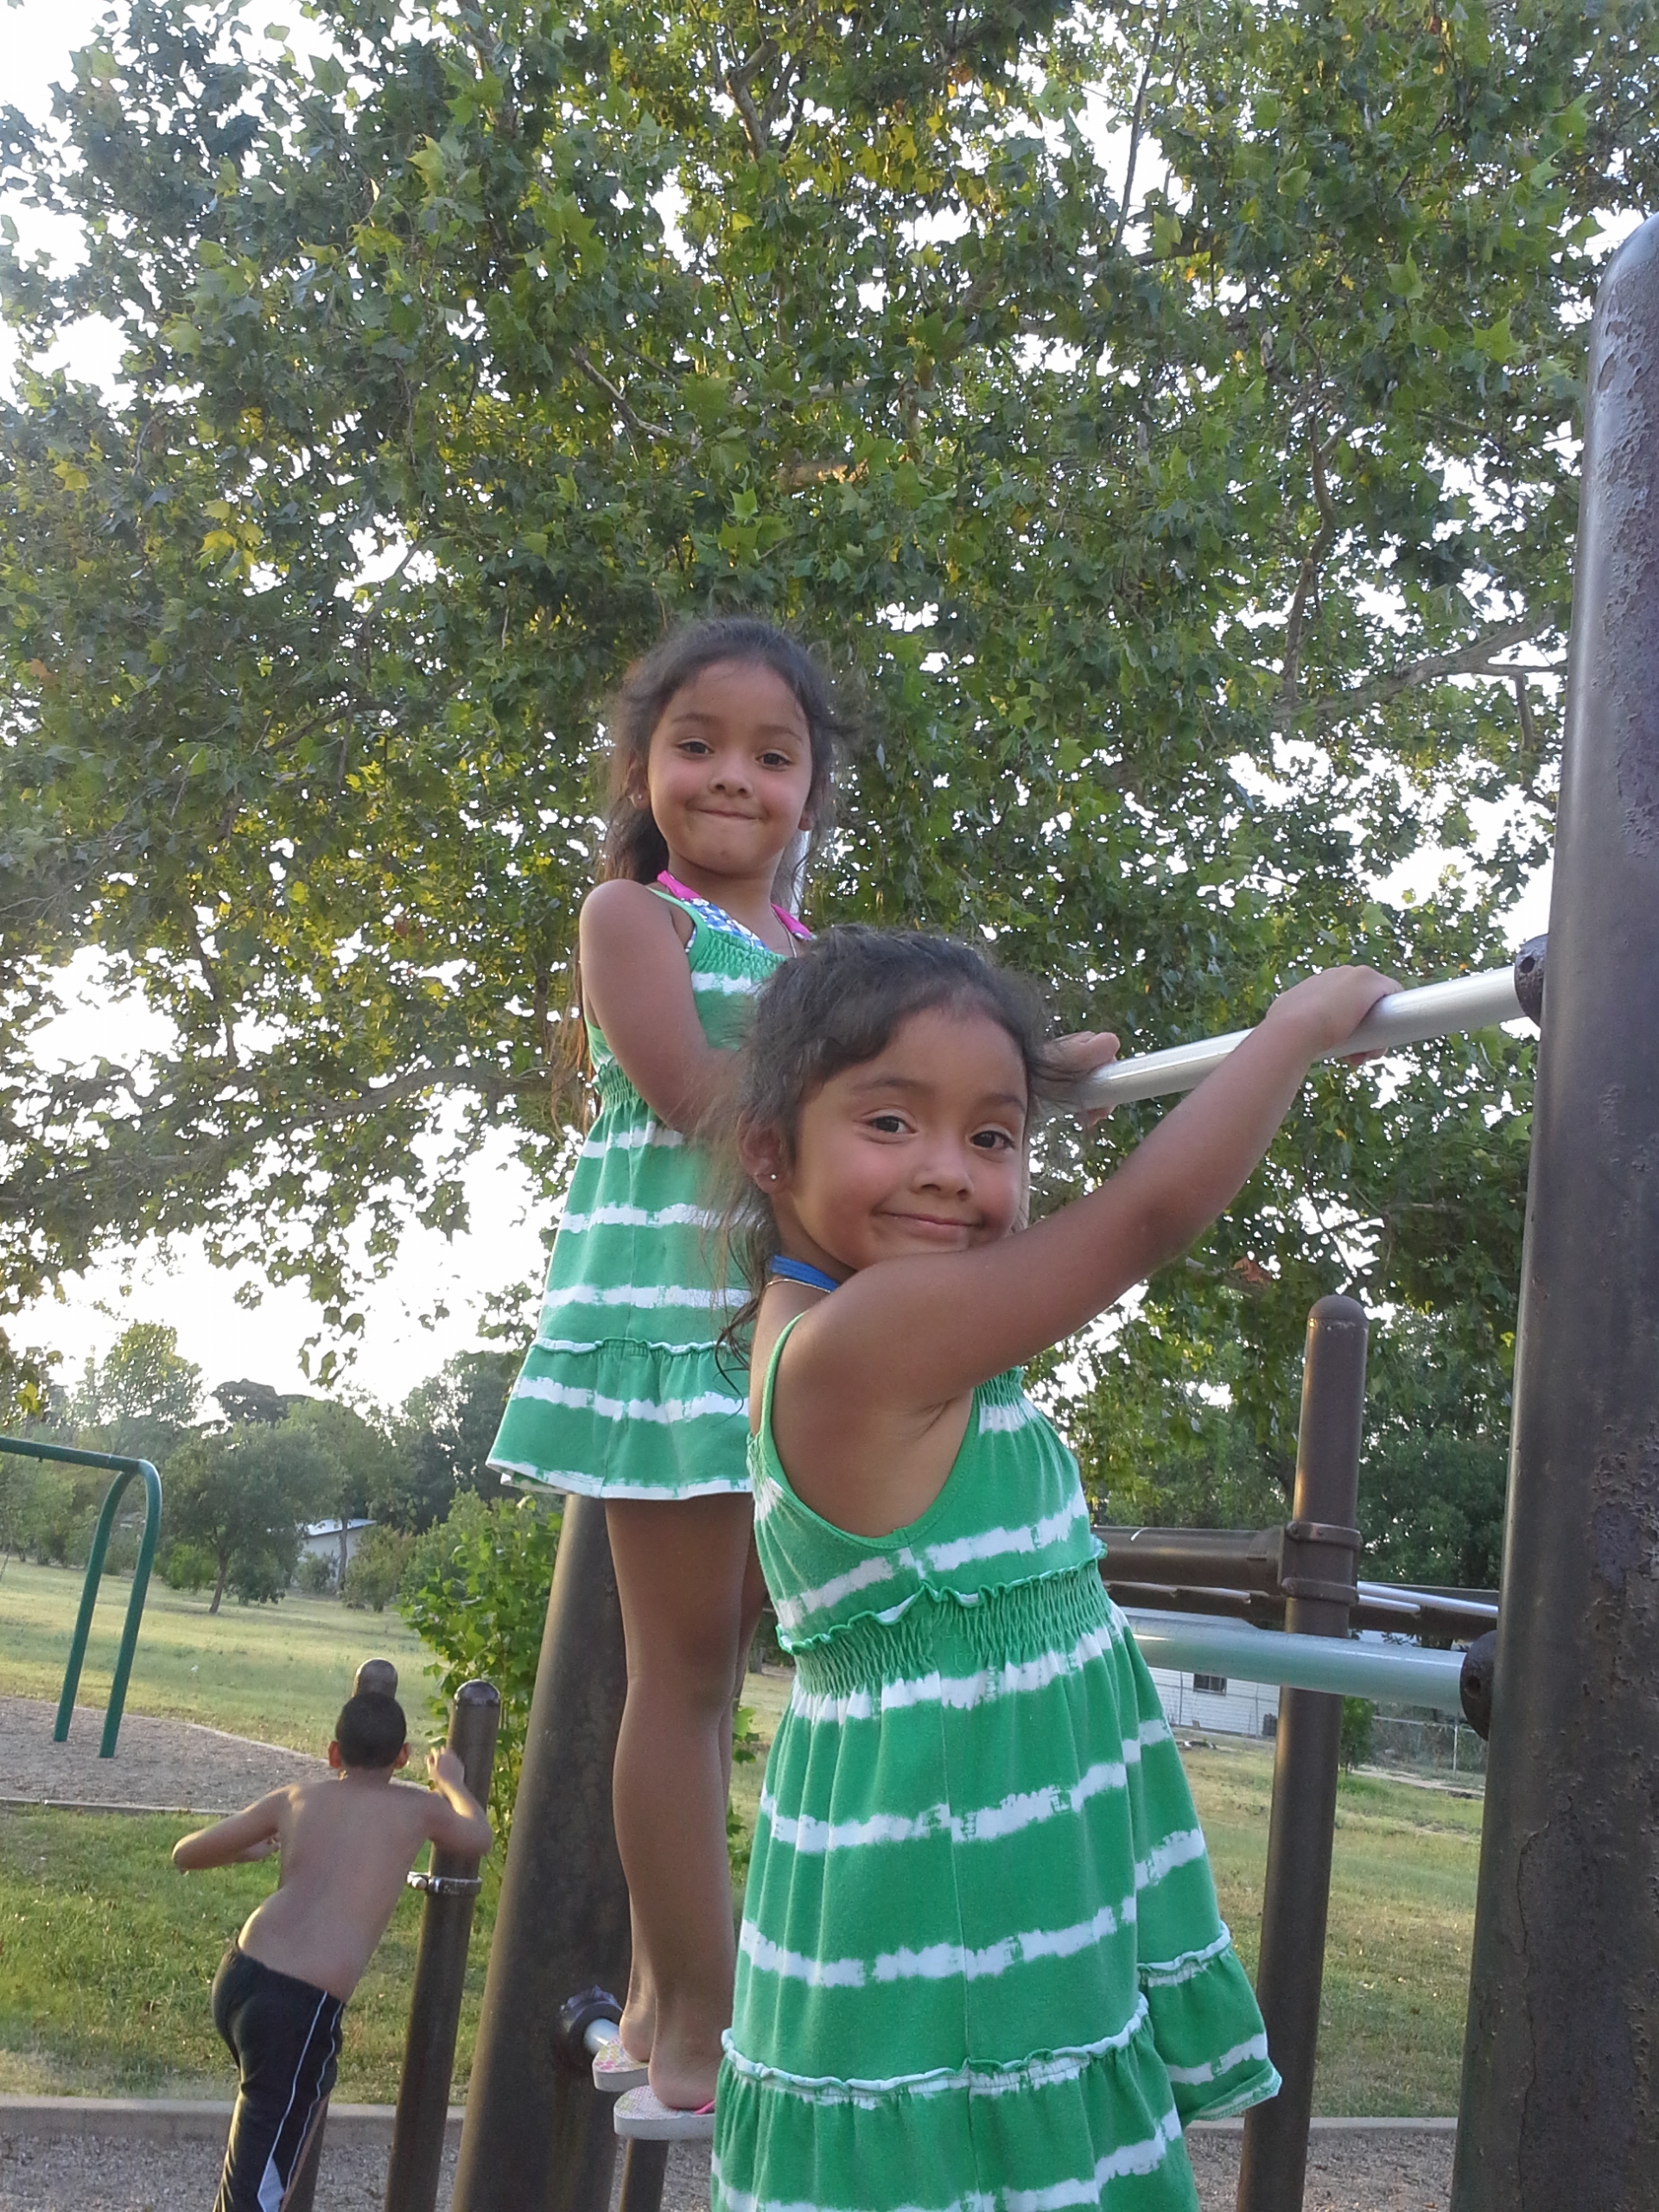 Nalena & Lavena playing at the park